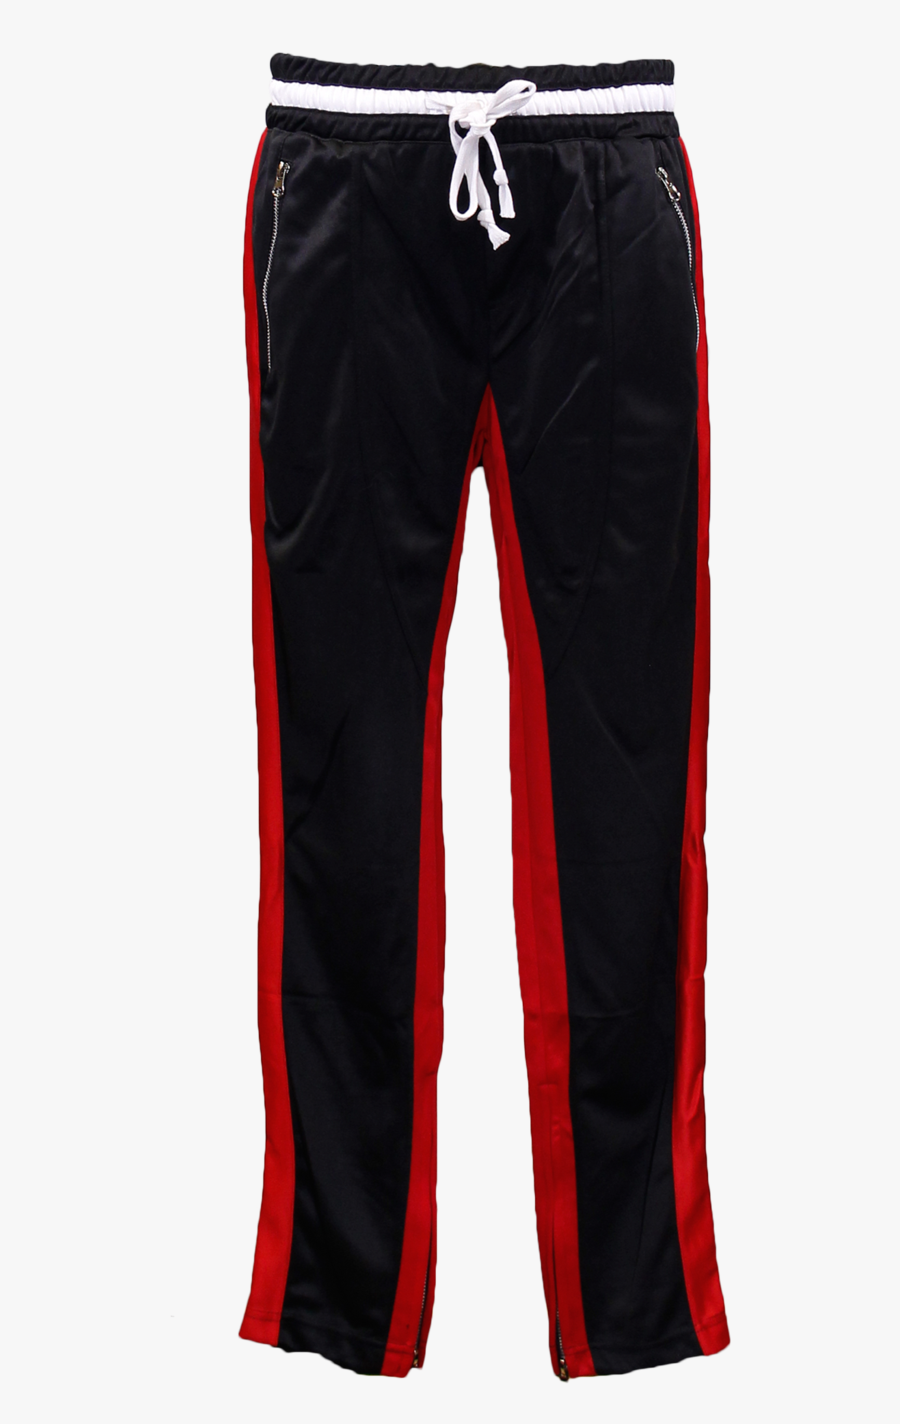 Red And Black Odd Culture Joggers/pants - Strange Pants Transparent Background, Transparent Clipart